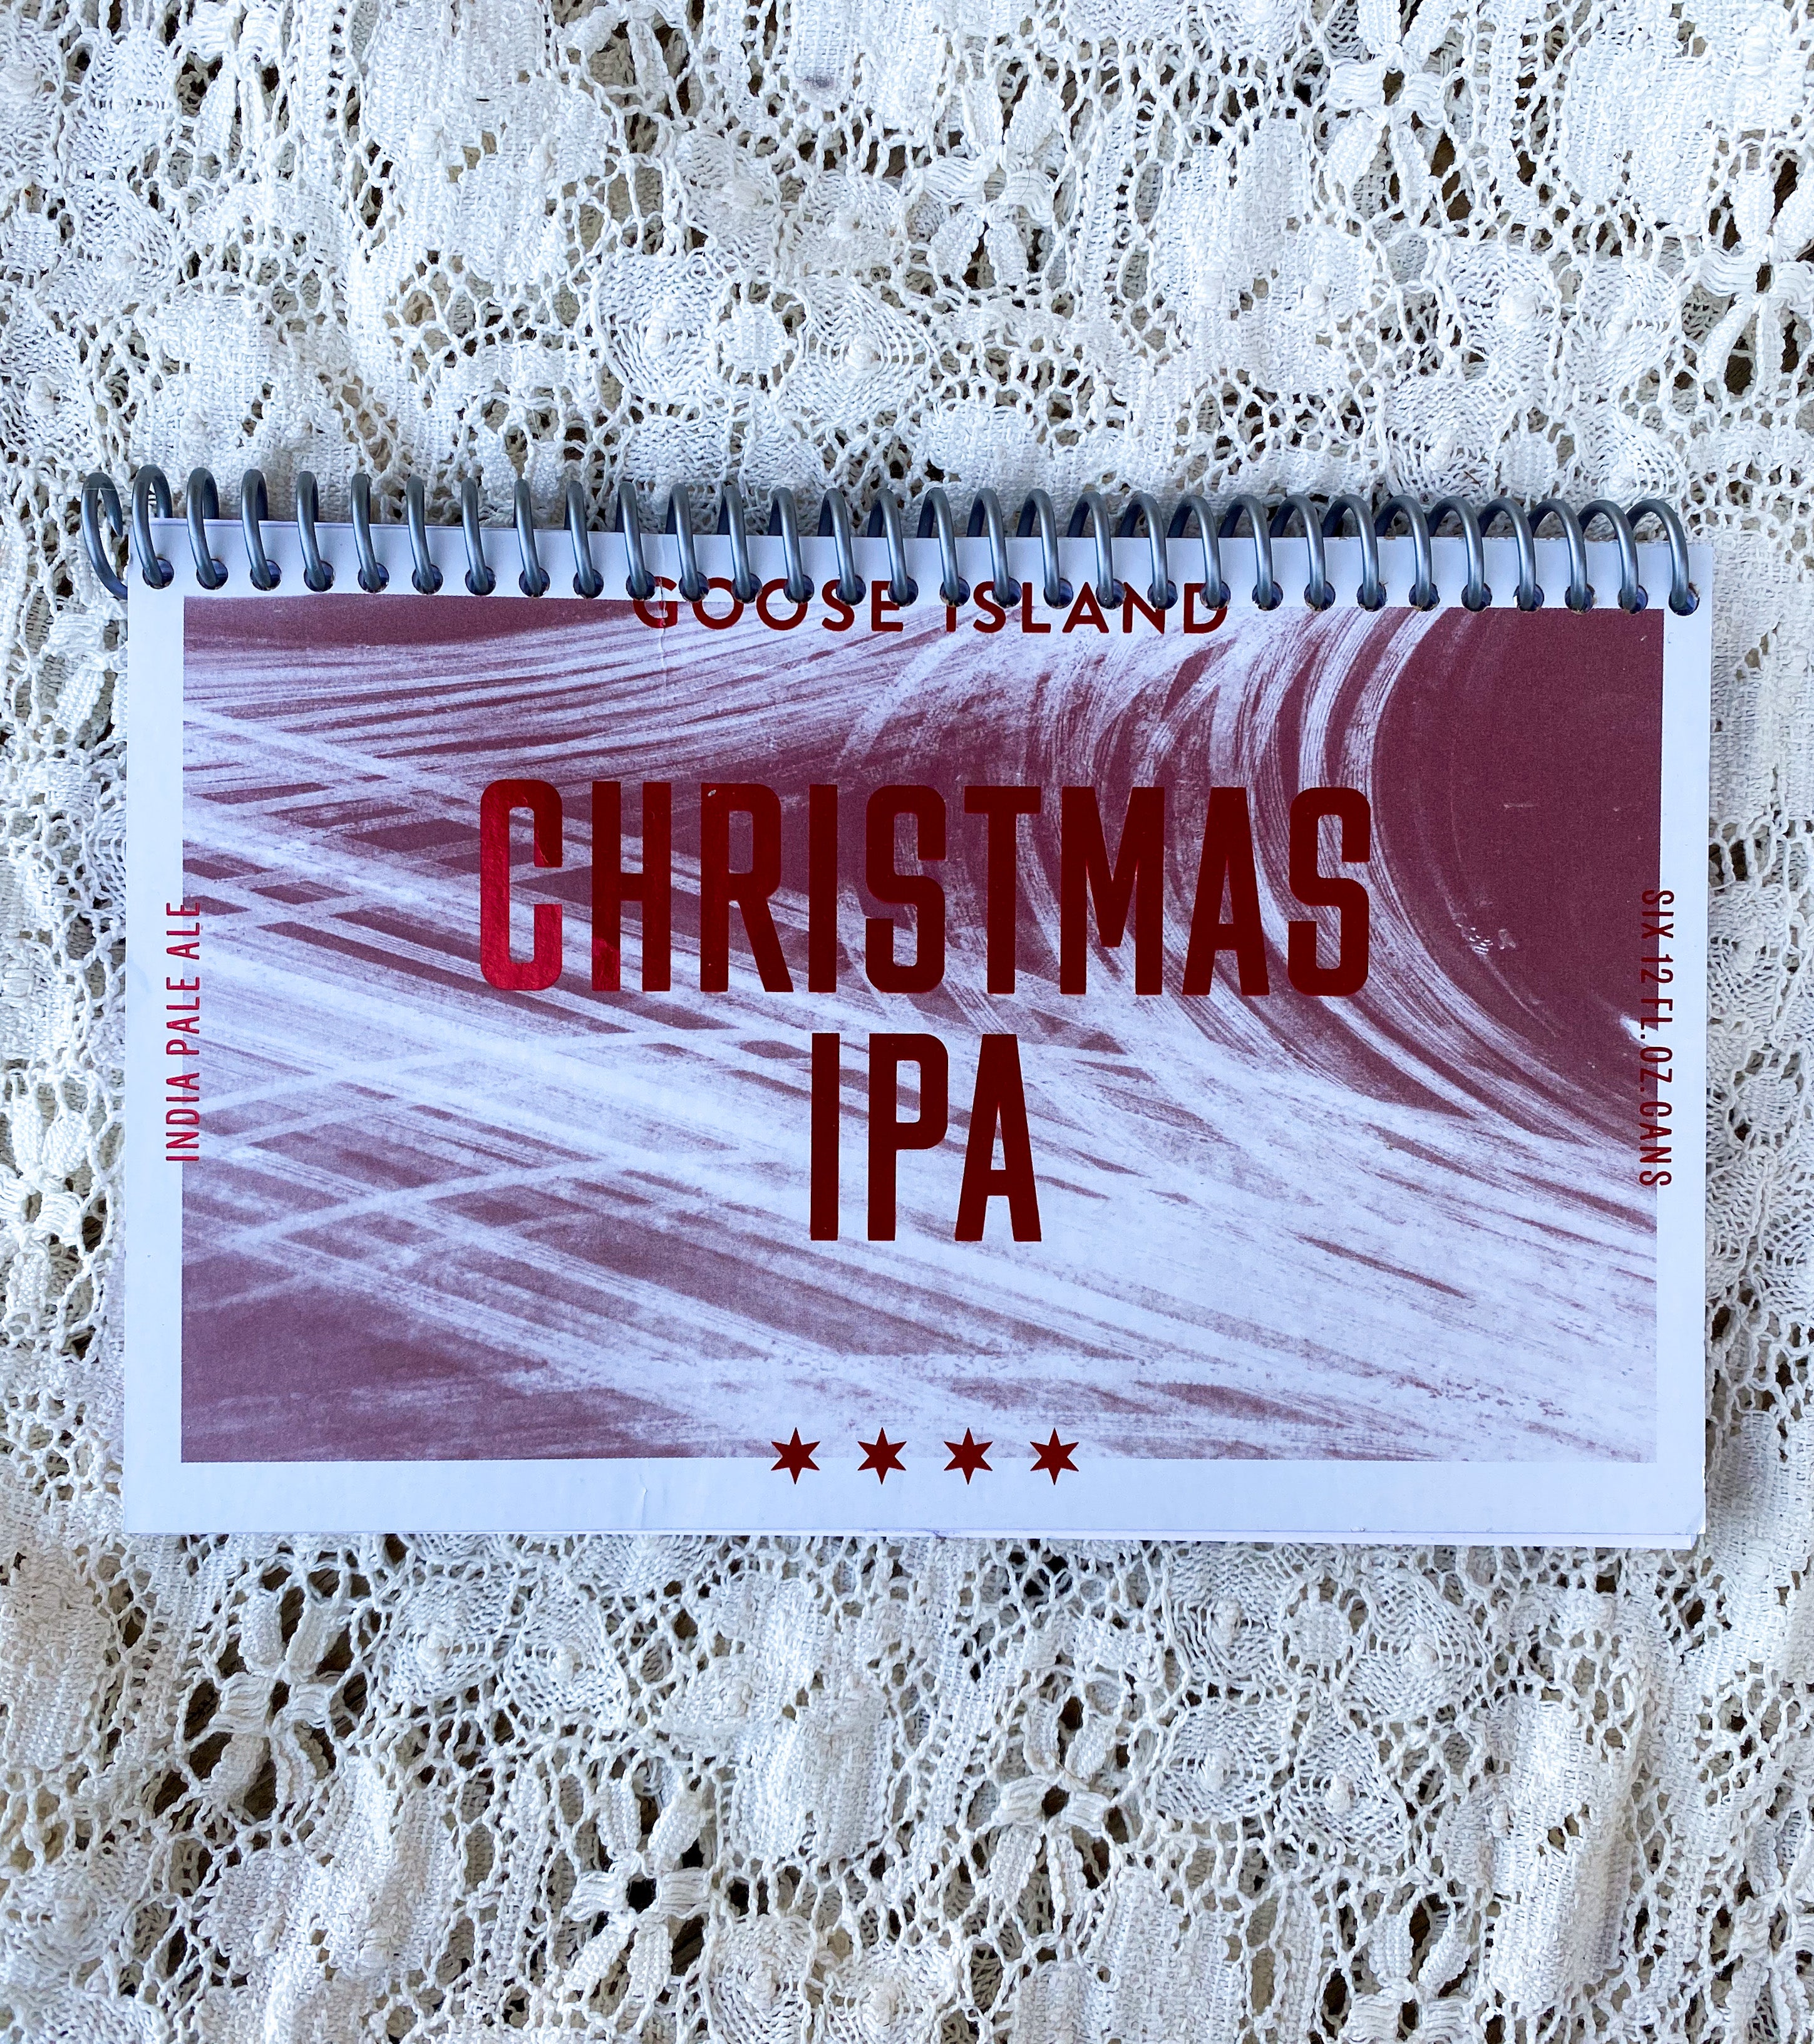 Goose Island Christmas IPA Recycled Beer Carton Notebook